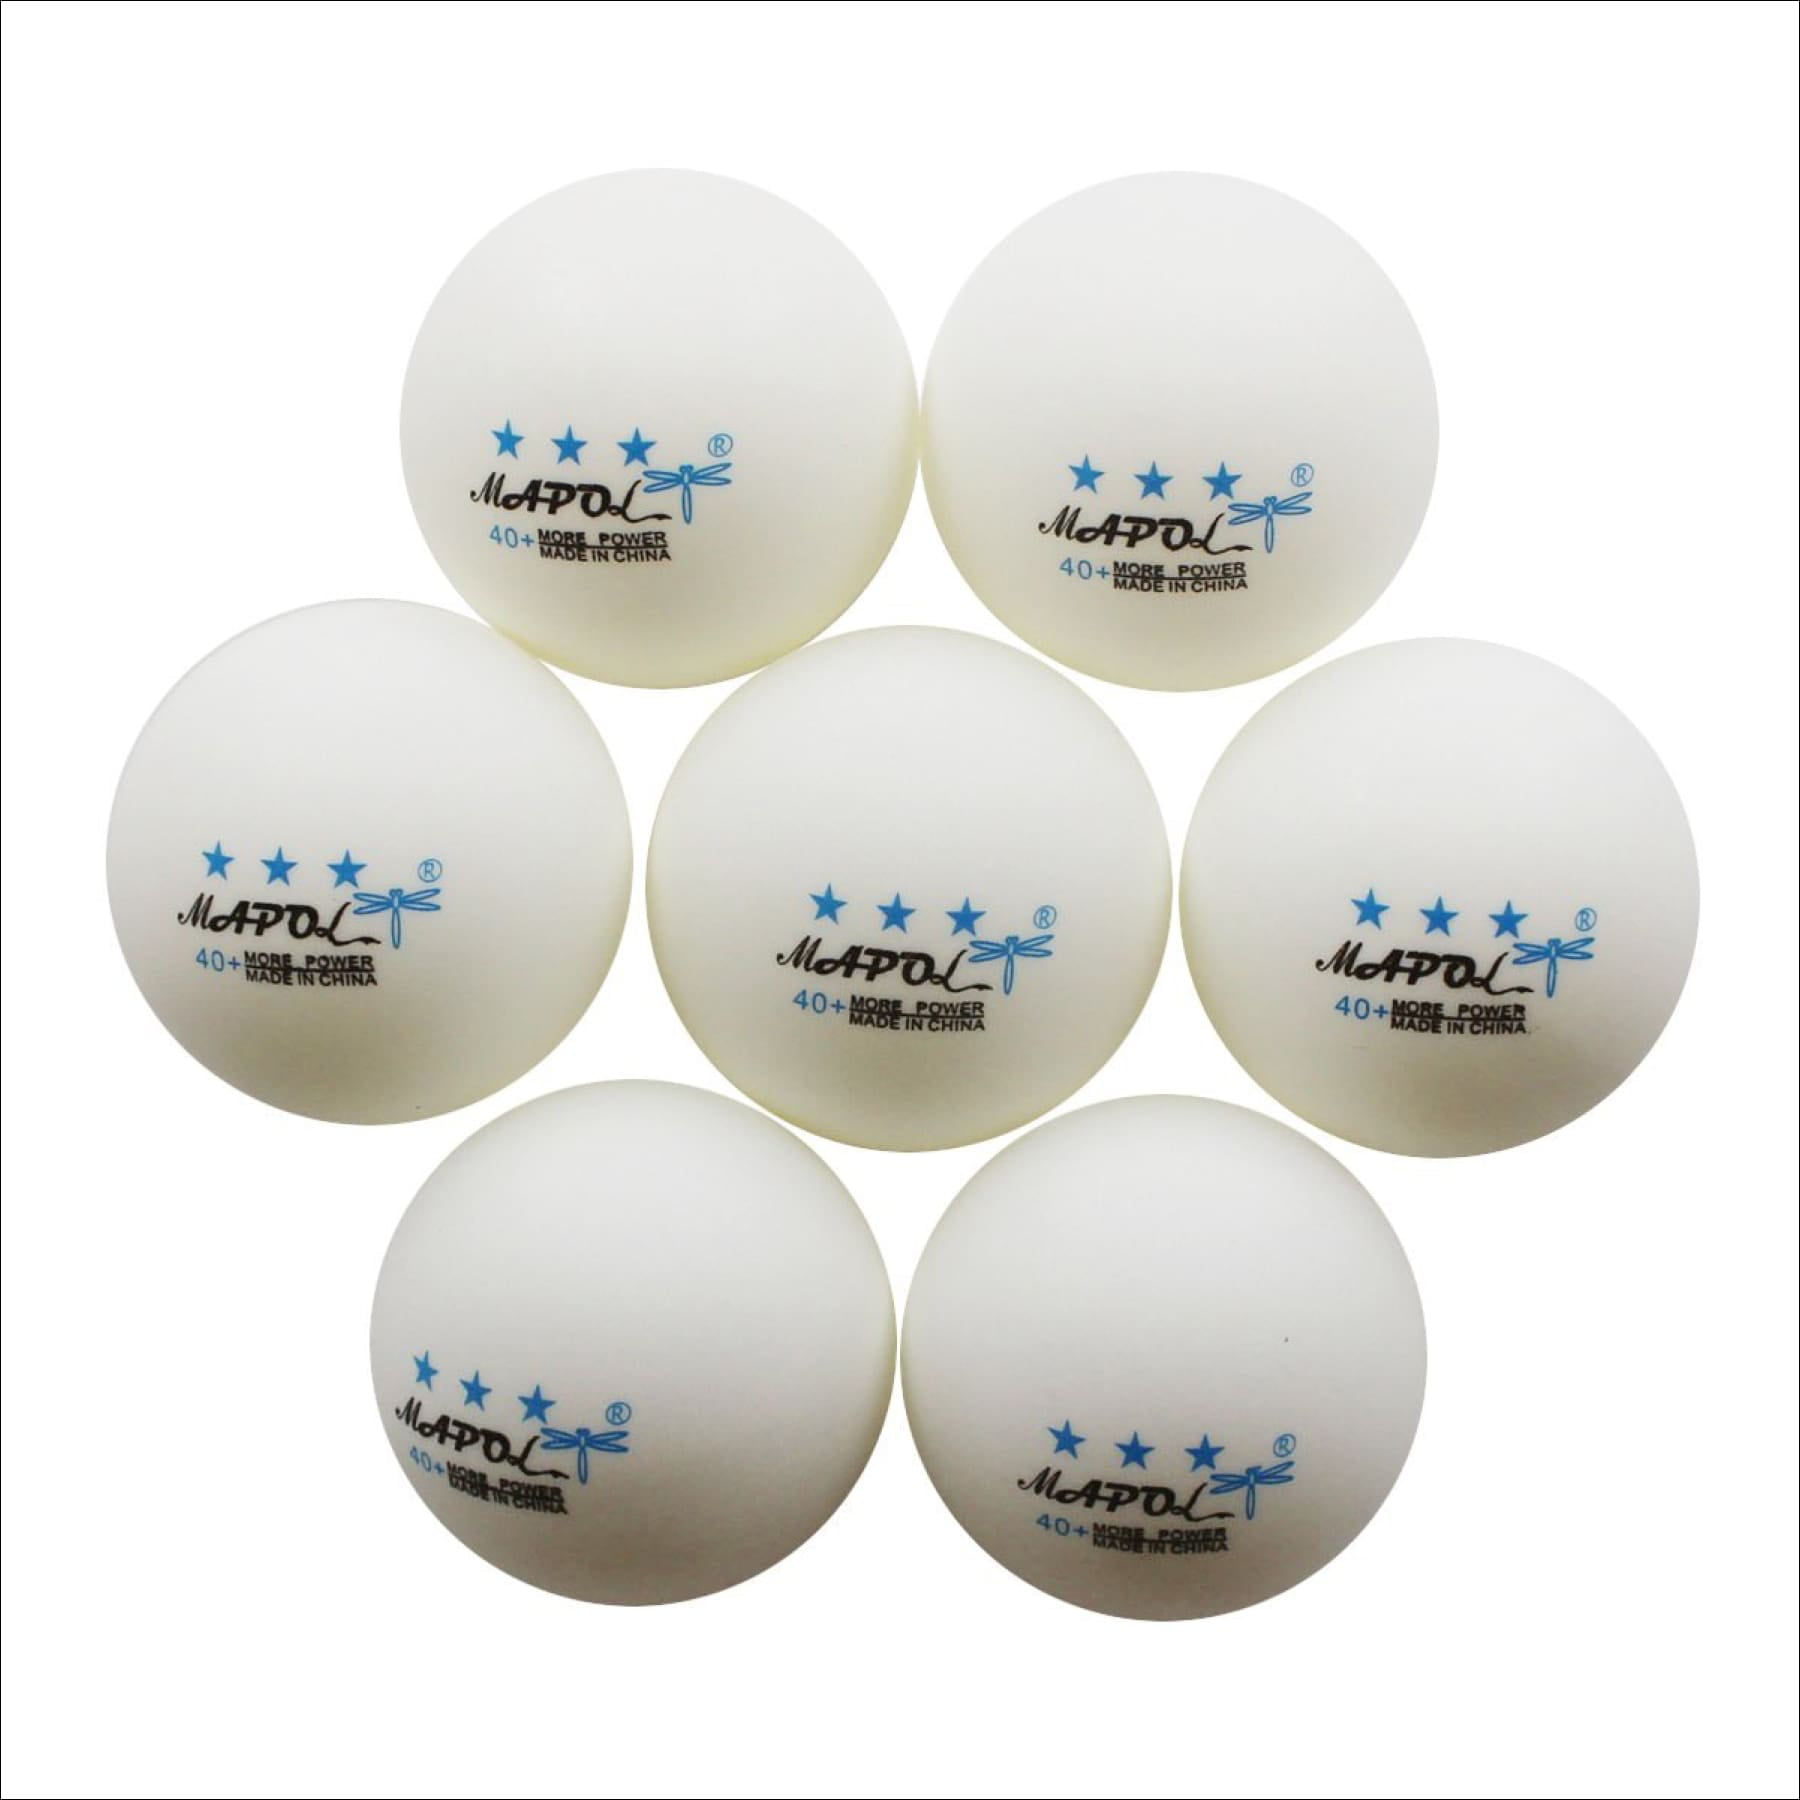 MAPOL 100 Orange 3 Star 40mm Table Tennis Balls Advanced Training Ping Pong Ball for sale online 